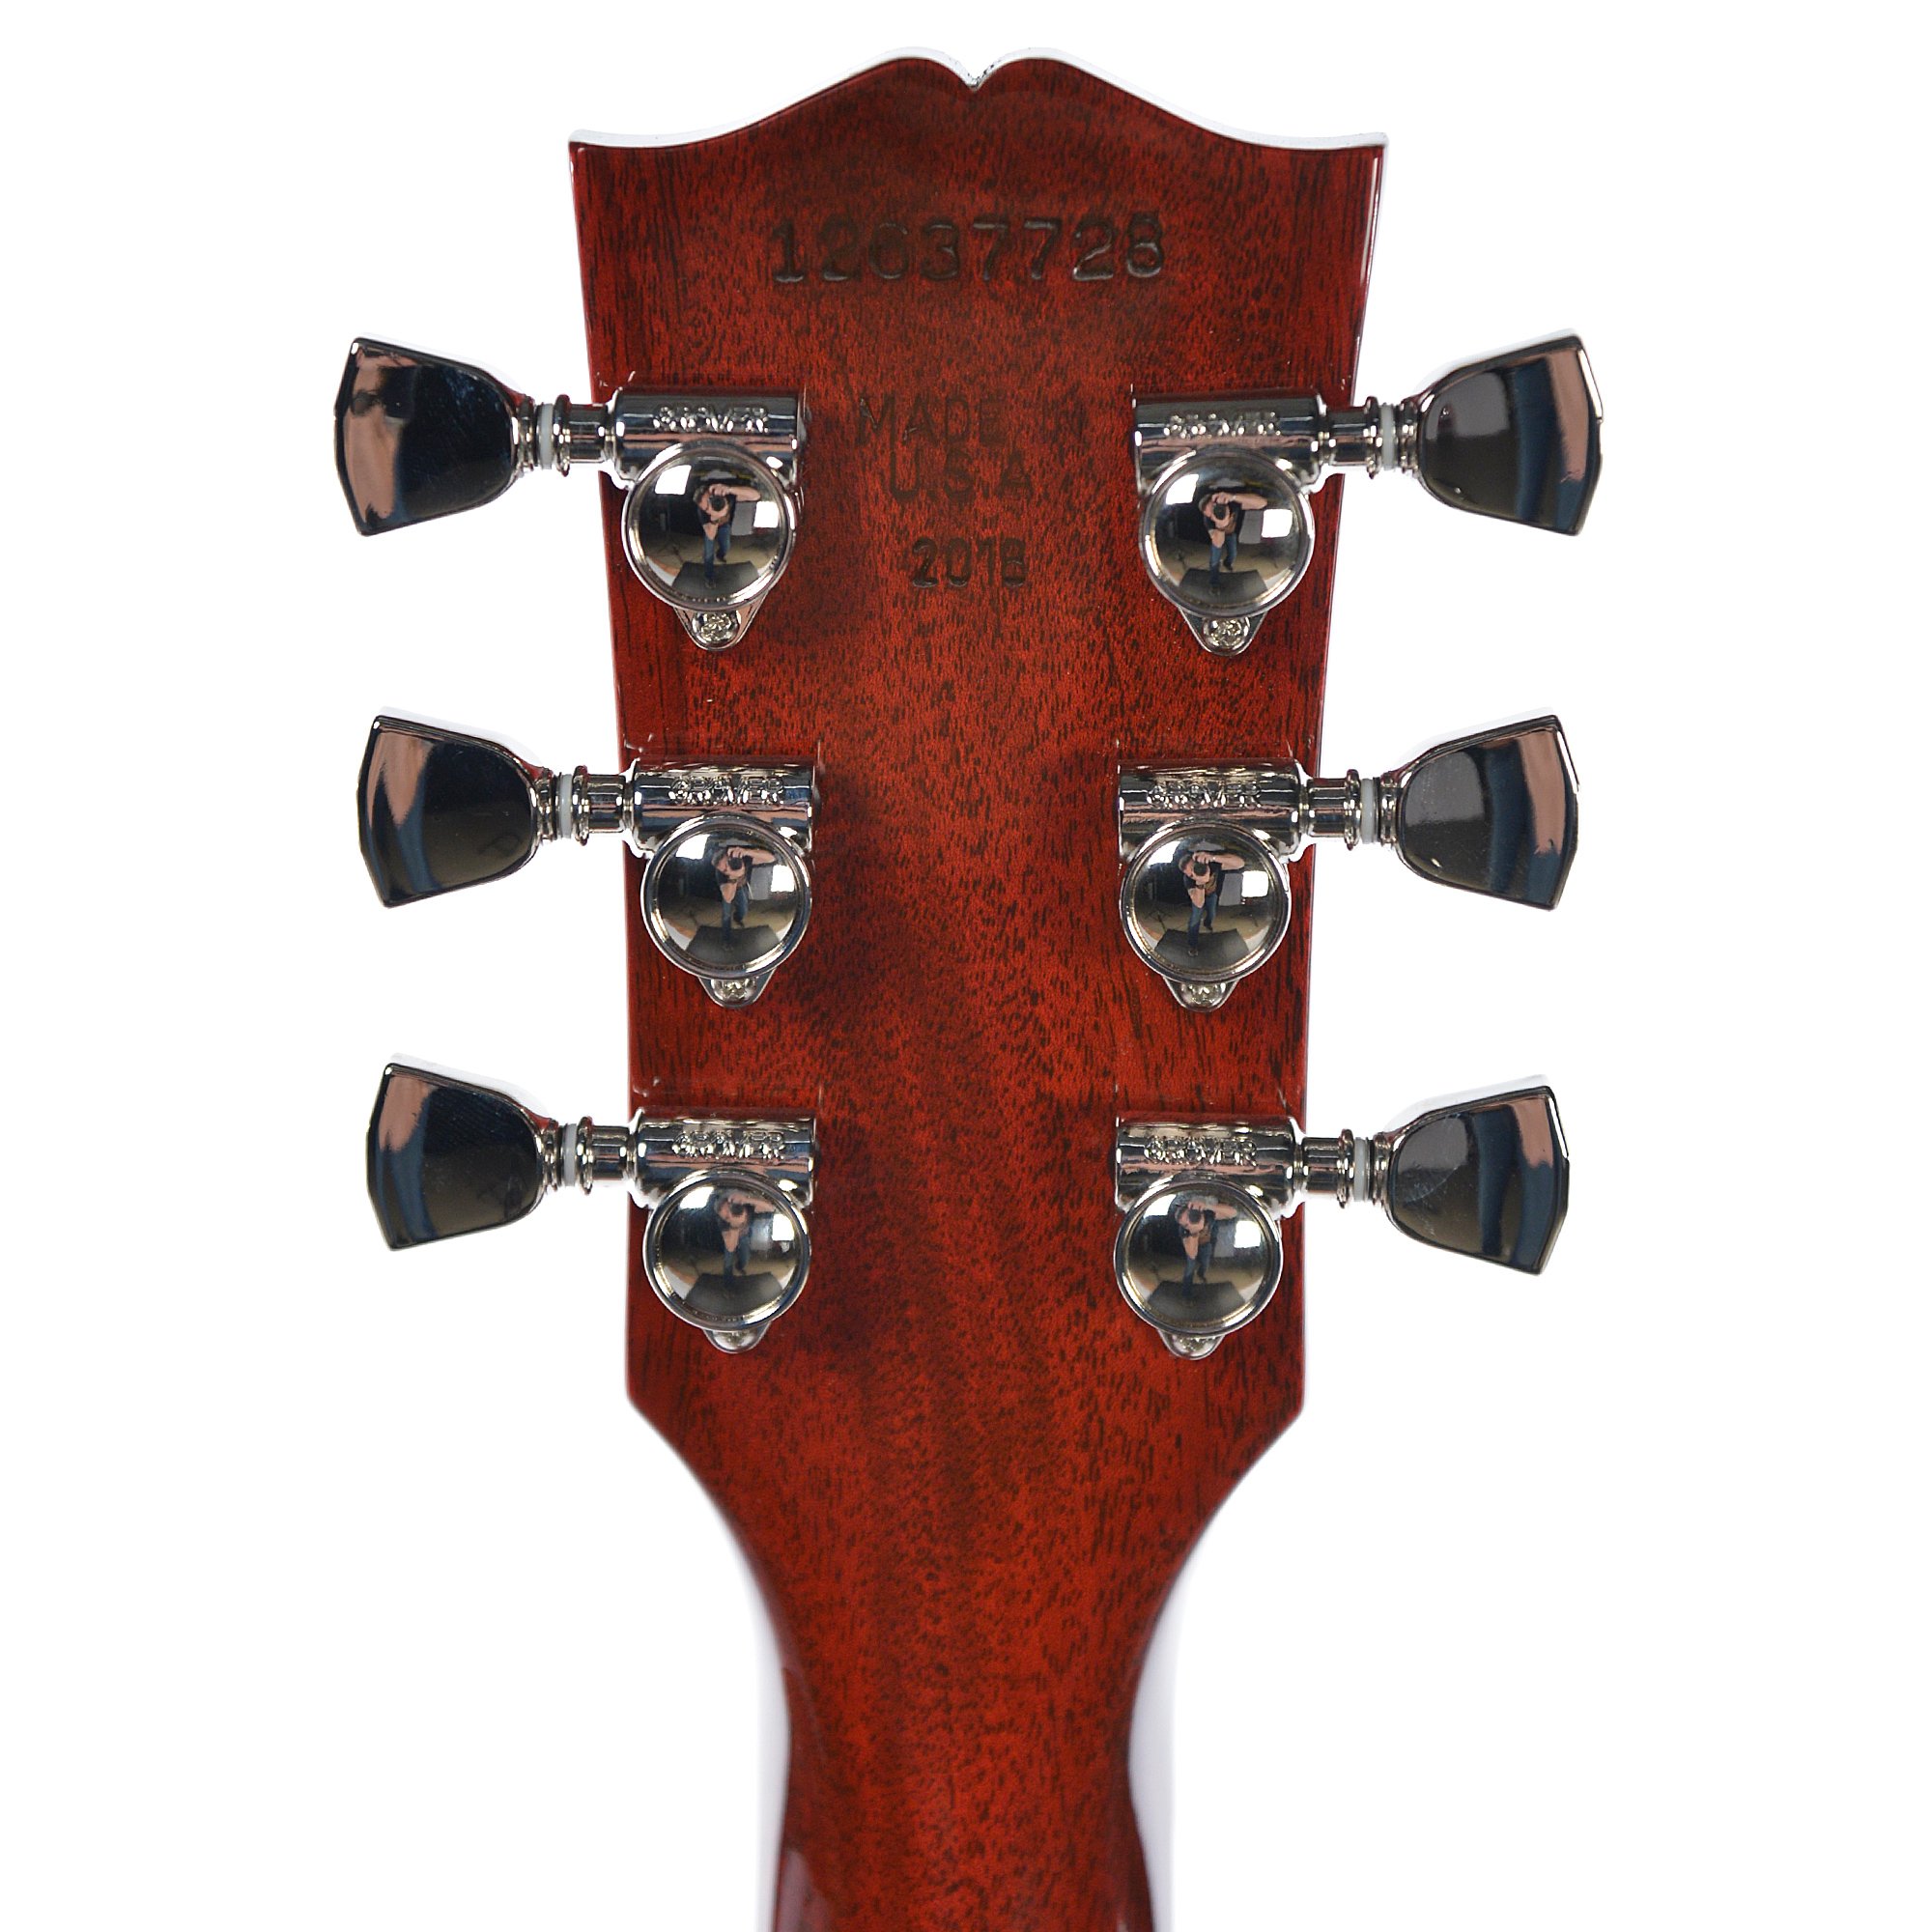 Gibson Es-335 Figured 2018 Ltd - Antique Sixties Cherry - Semi-hollow electric guitar - Variation 4